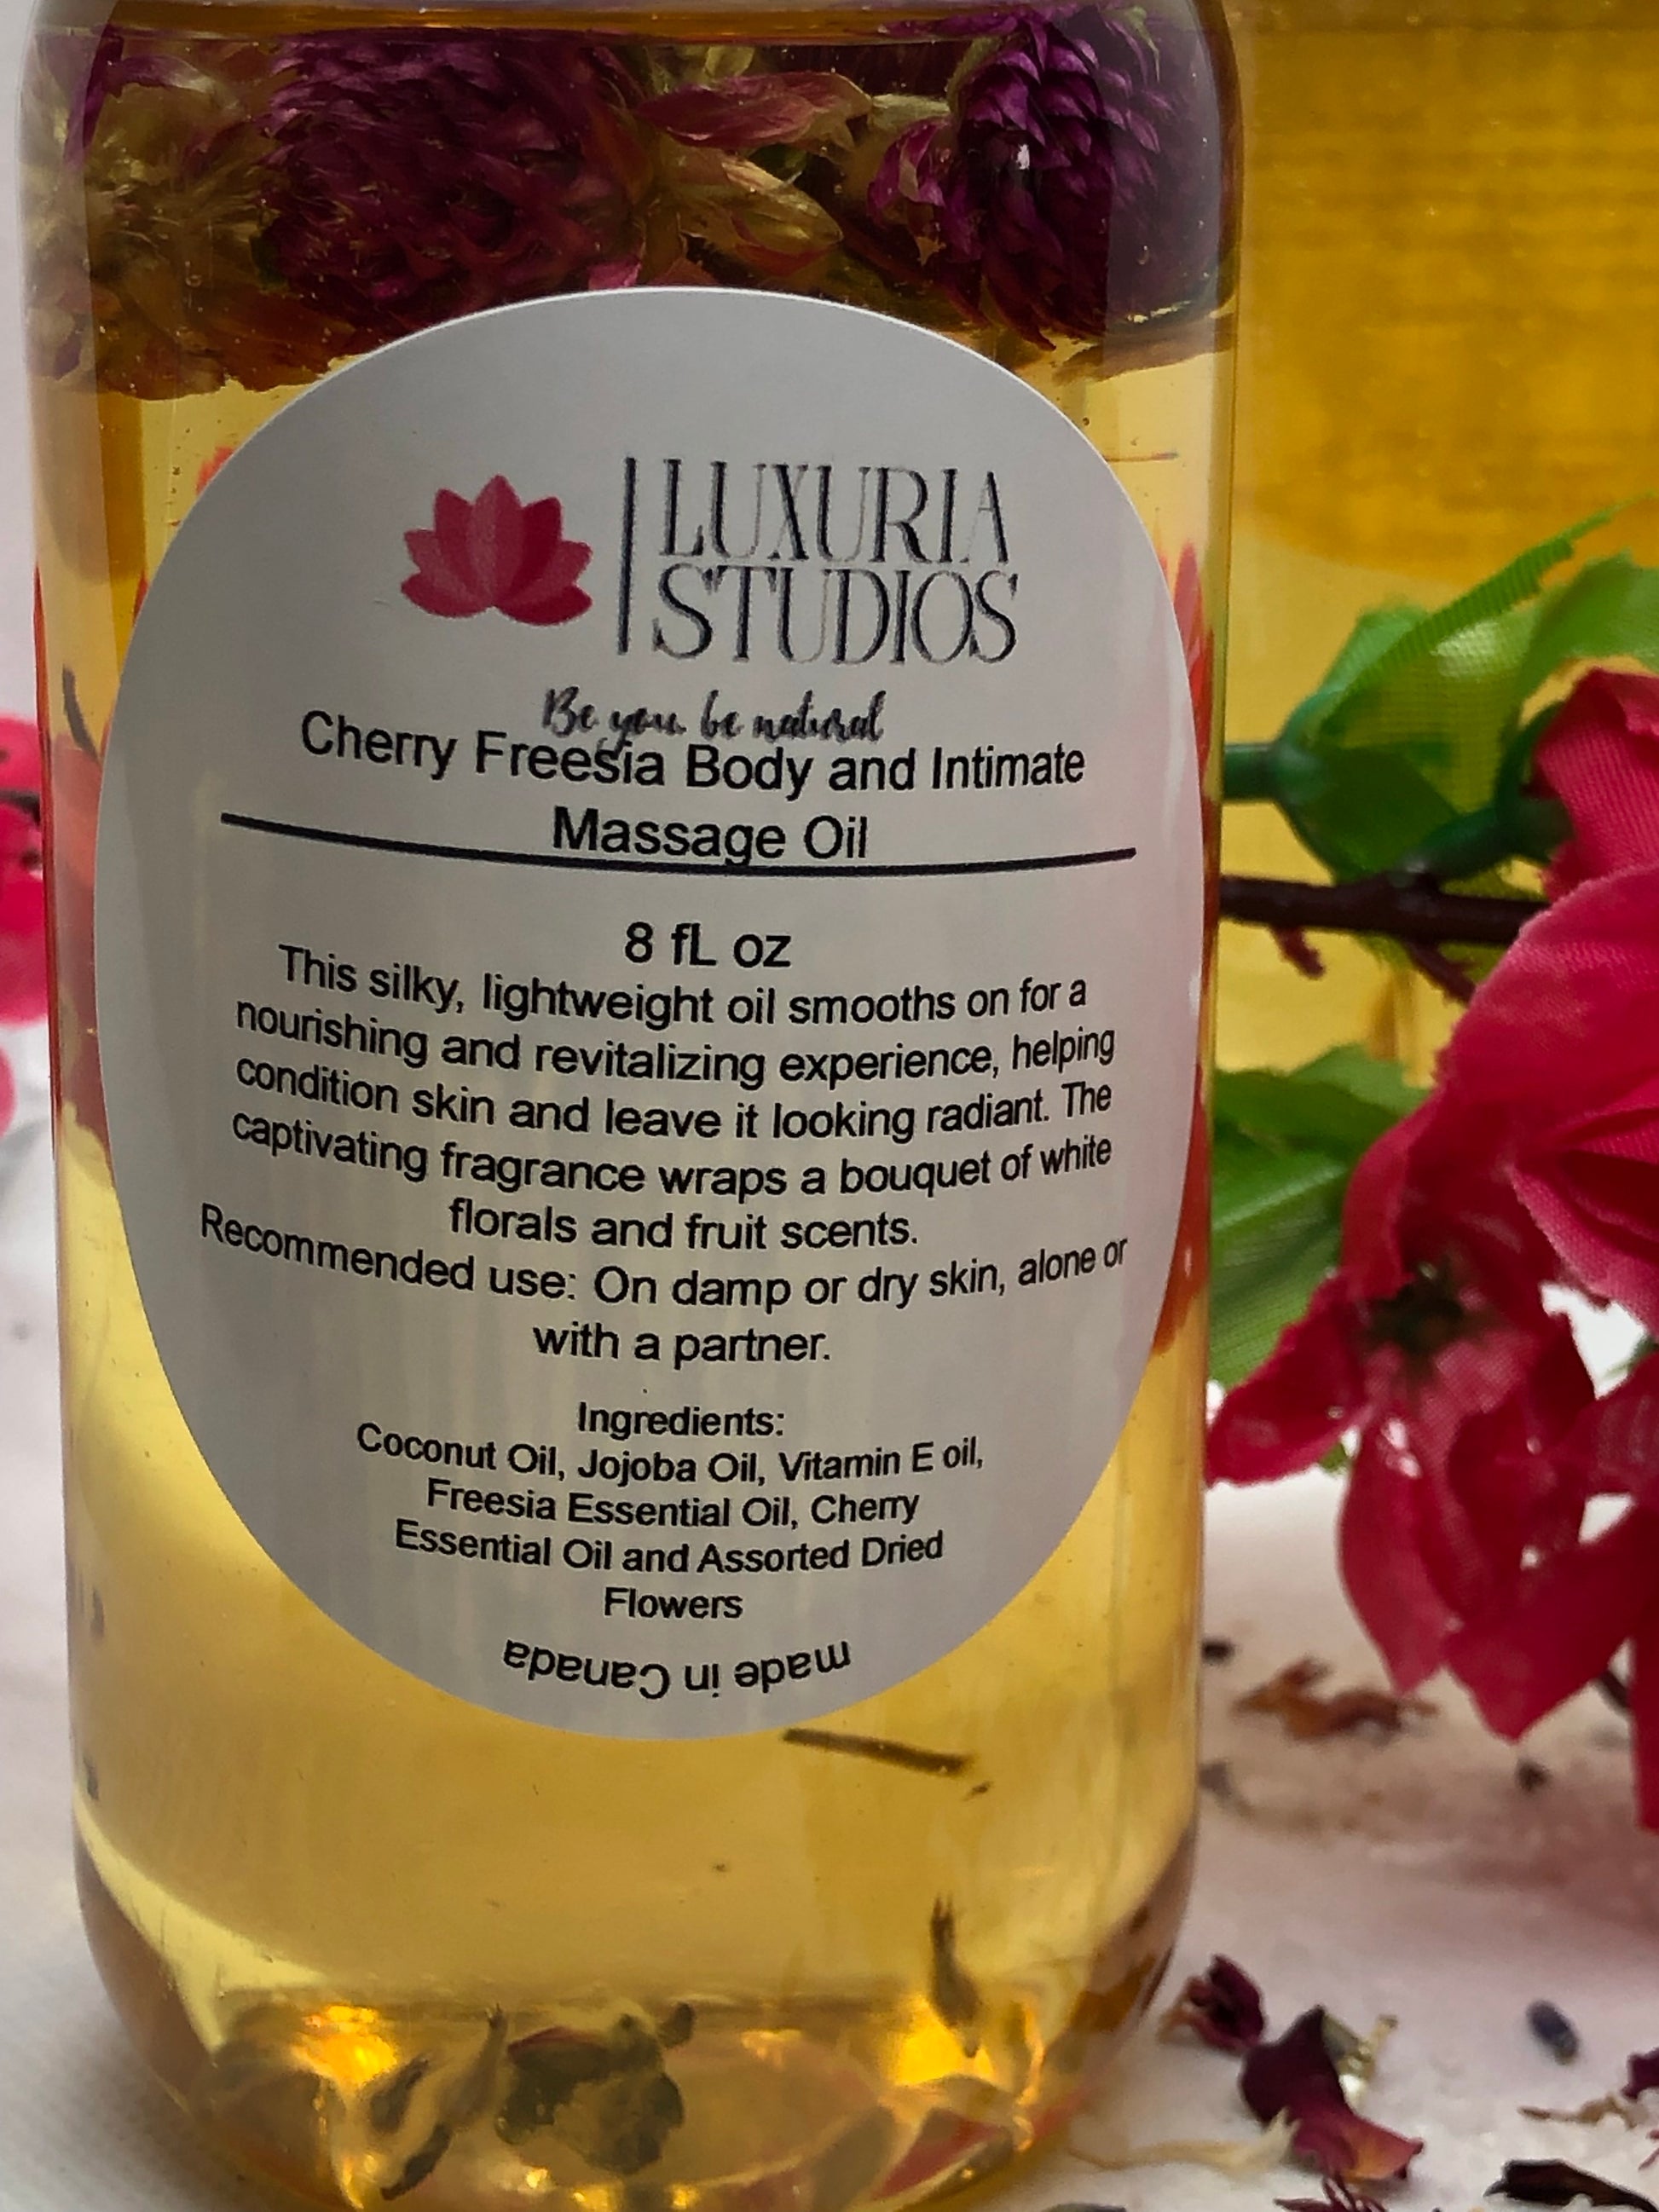 Cherry Freesia Body and Intimate Massage Oil – Luxuria Studios